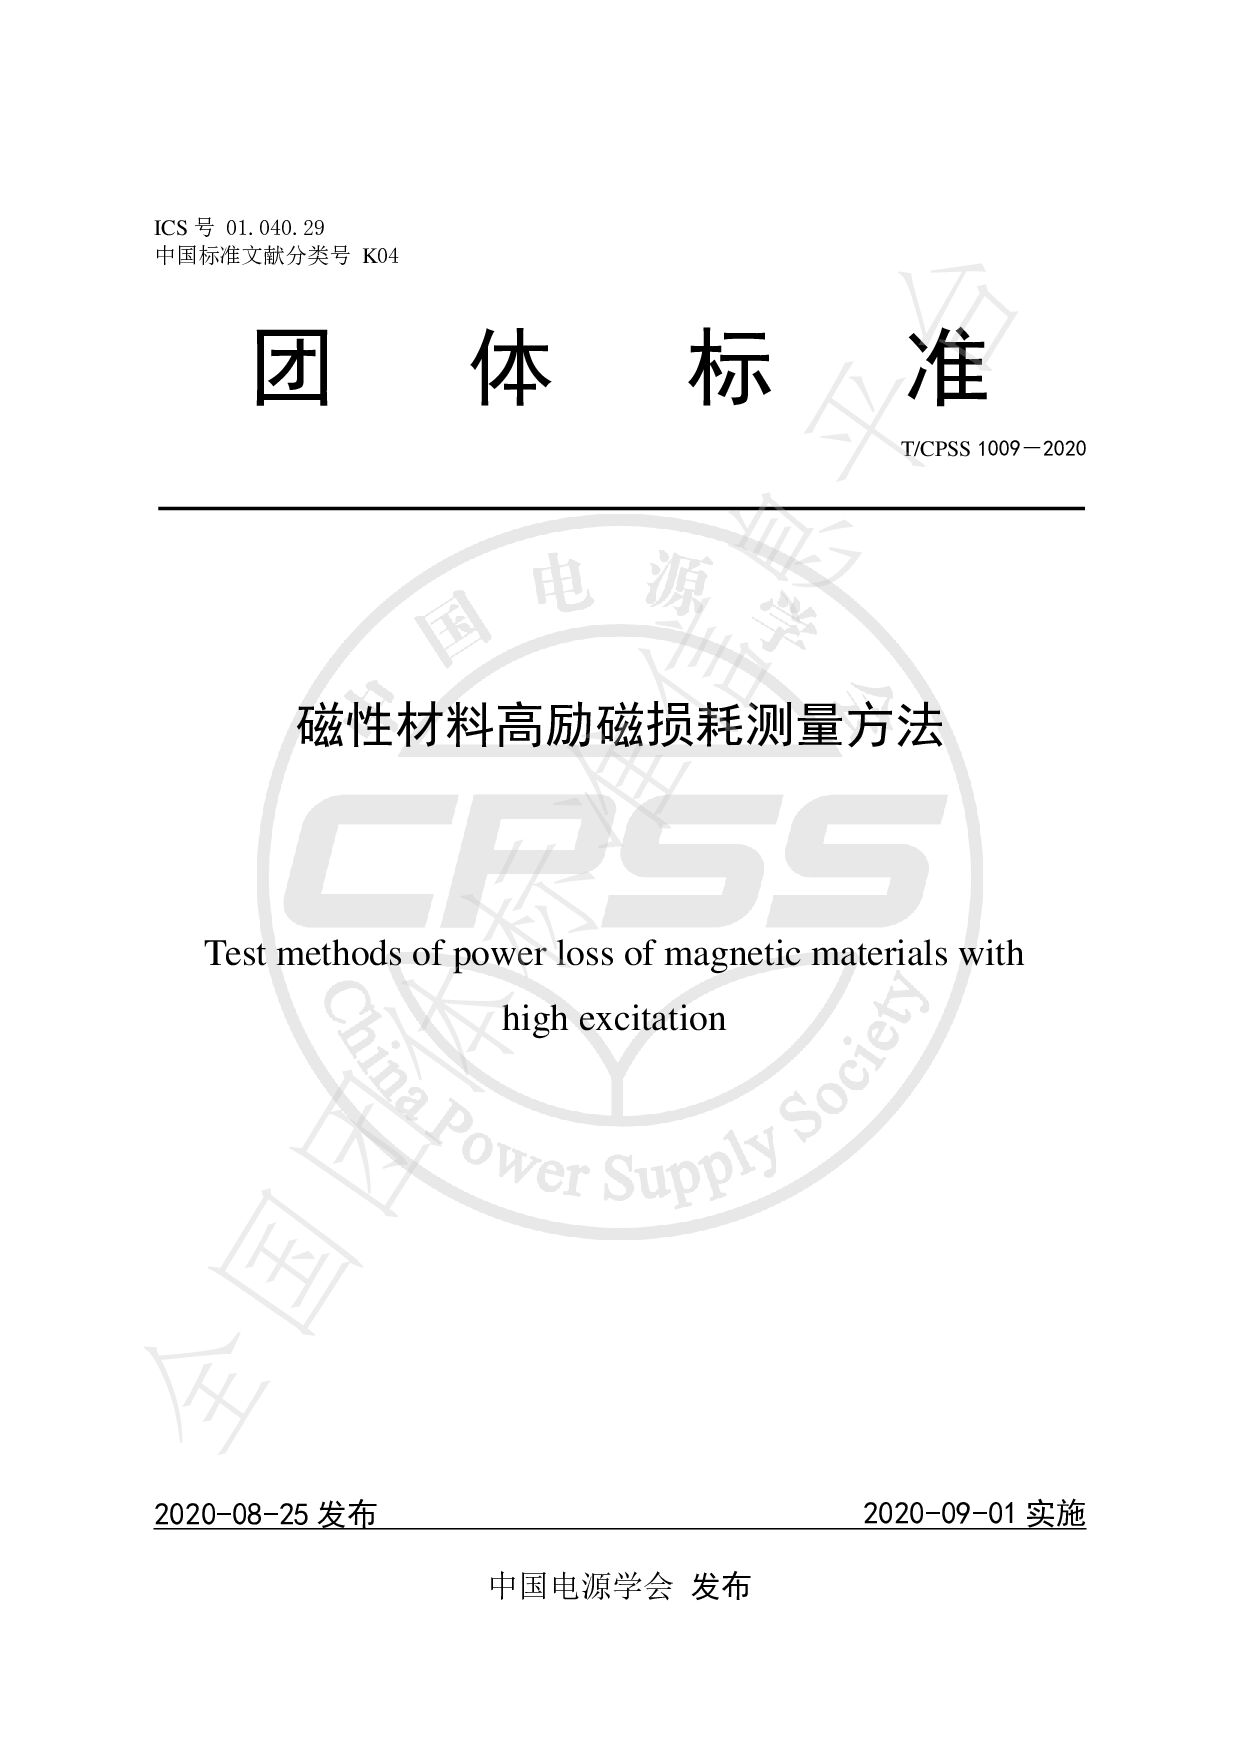 T/CPSS 1009-2020封面图